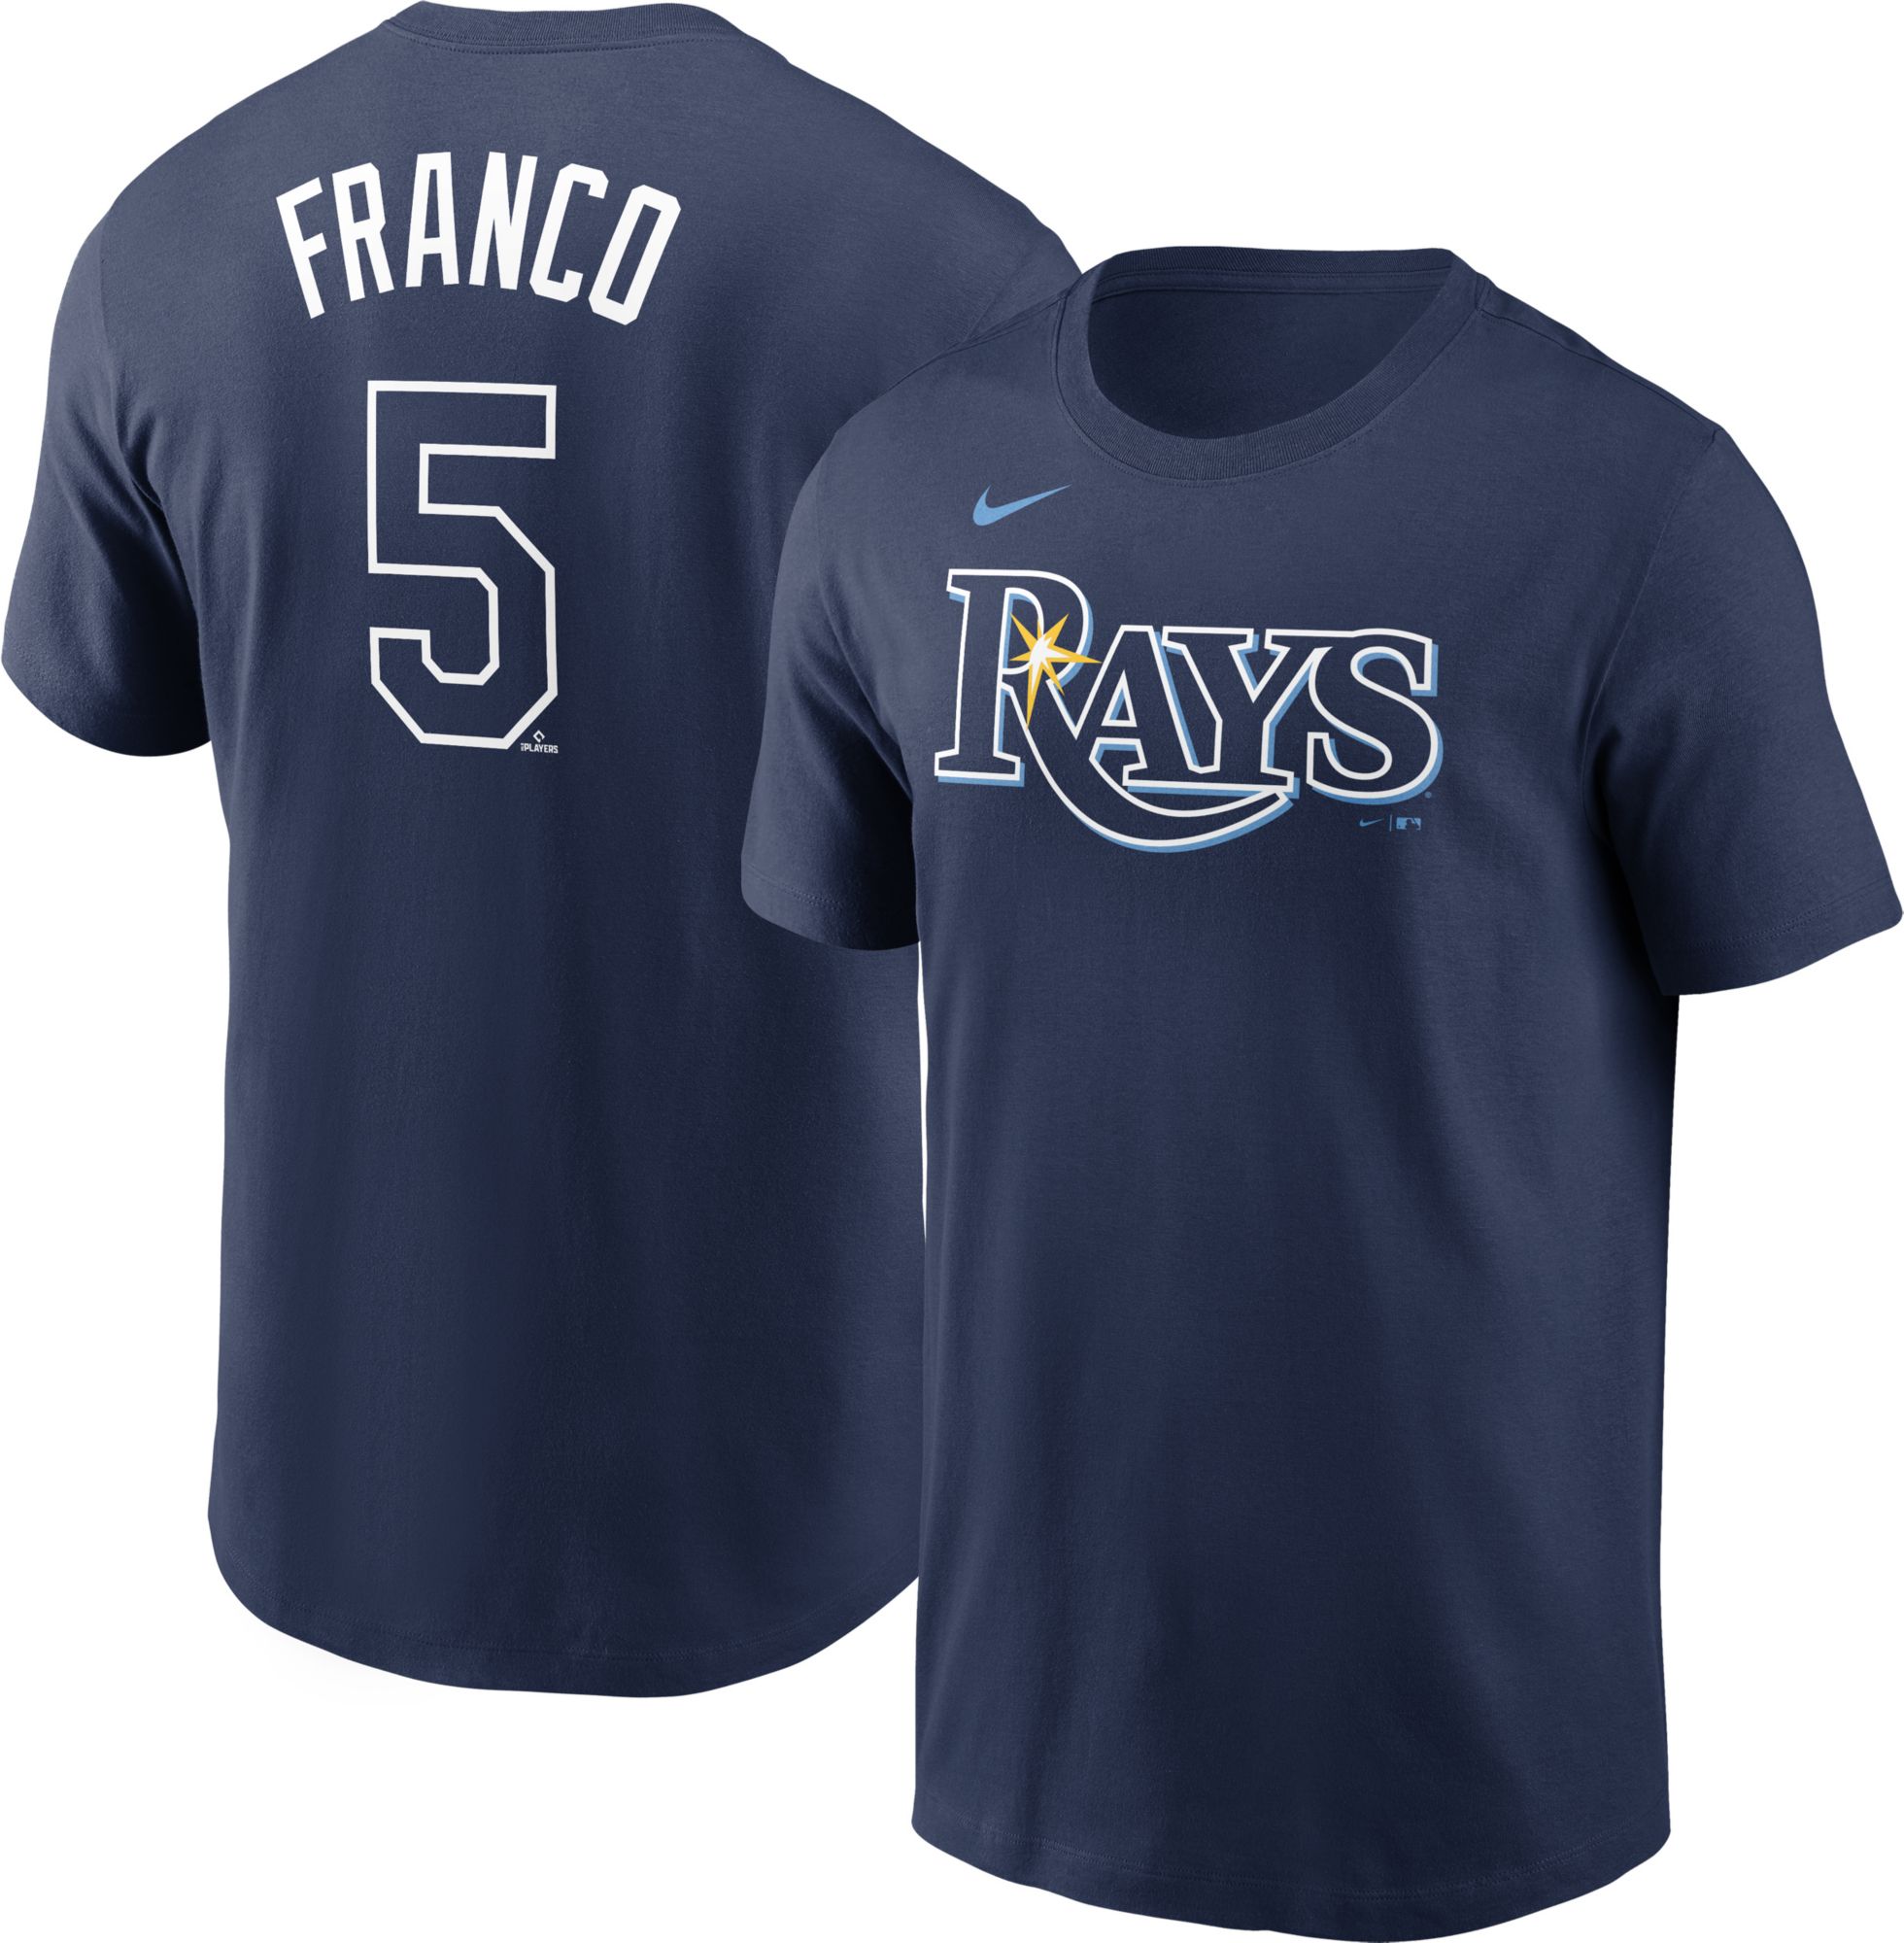 Nike / Men's Tampa Bay Rays Wander Franco #5 Navy T-Shirt